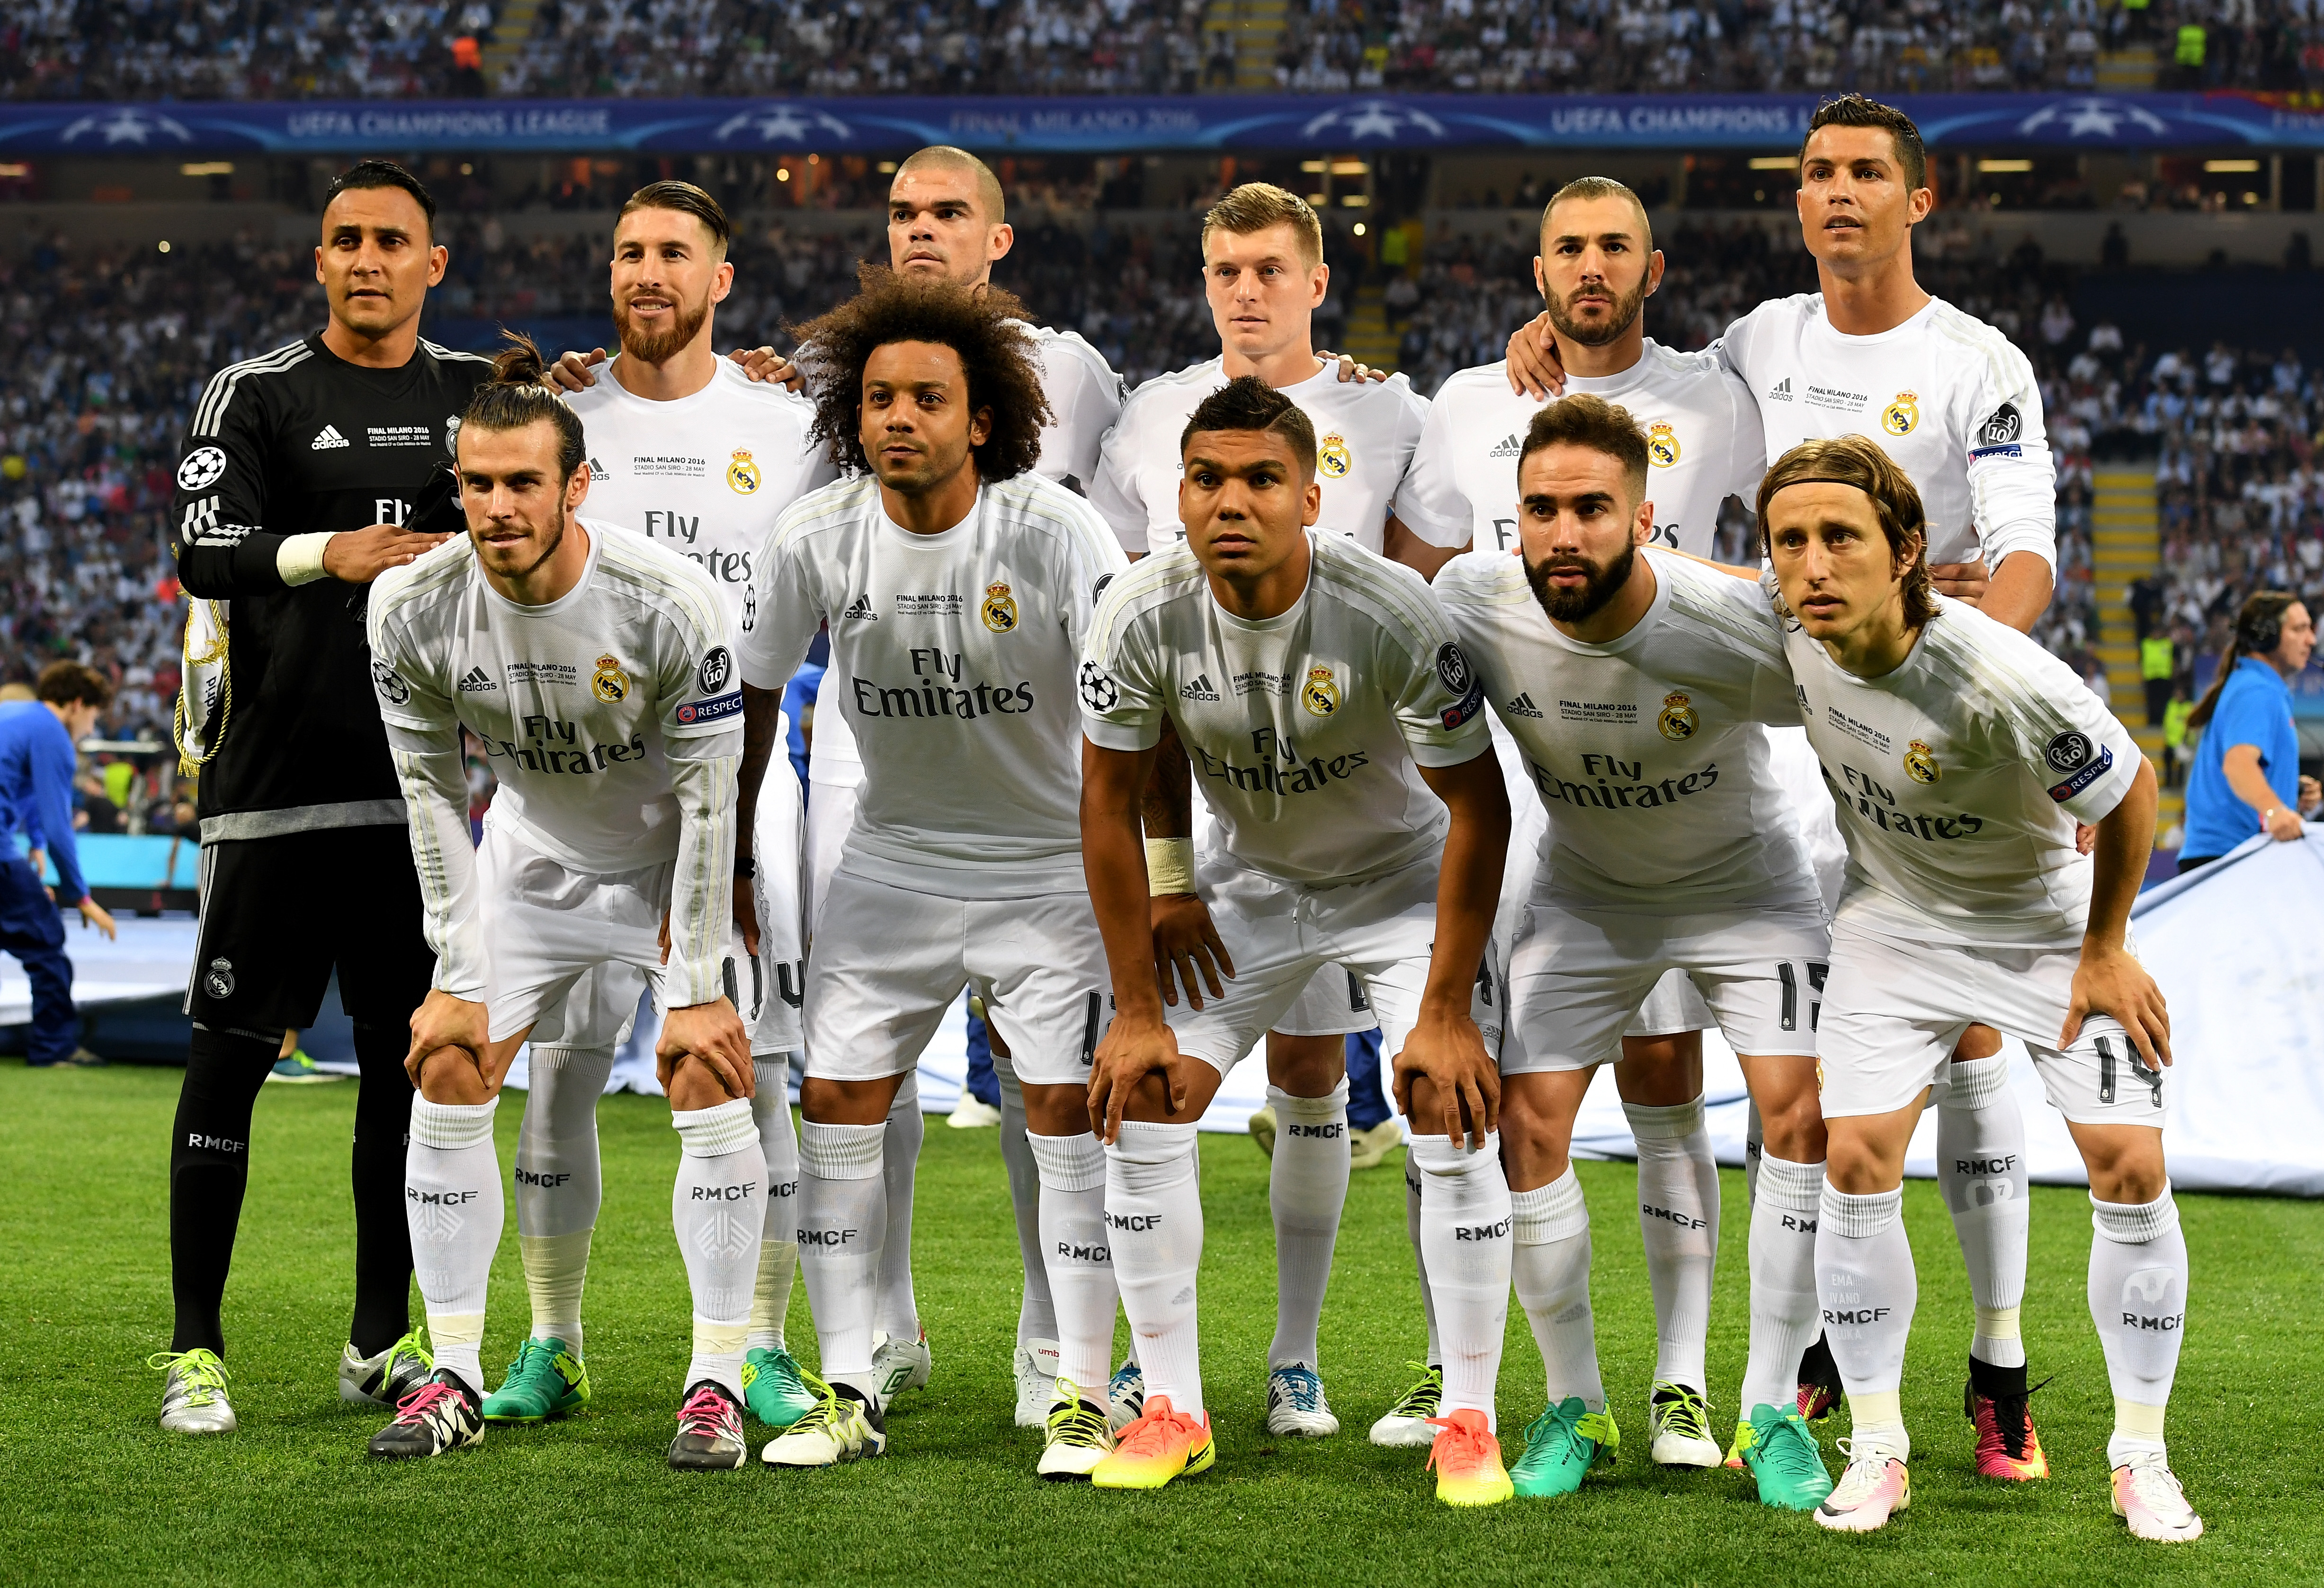 1 2 июня 2017. Команда Реал Мадрид 2016. Команда Реал Мадрид 2015. Фото команды Реал Мадрид 2016. Состав Реал Мадрида 2016 года.